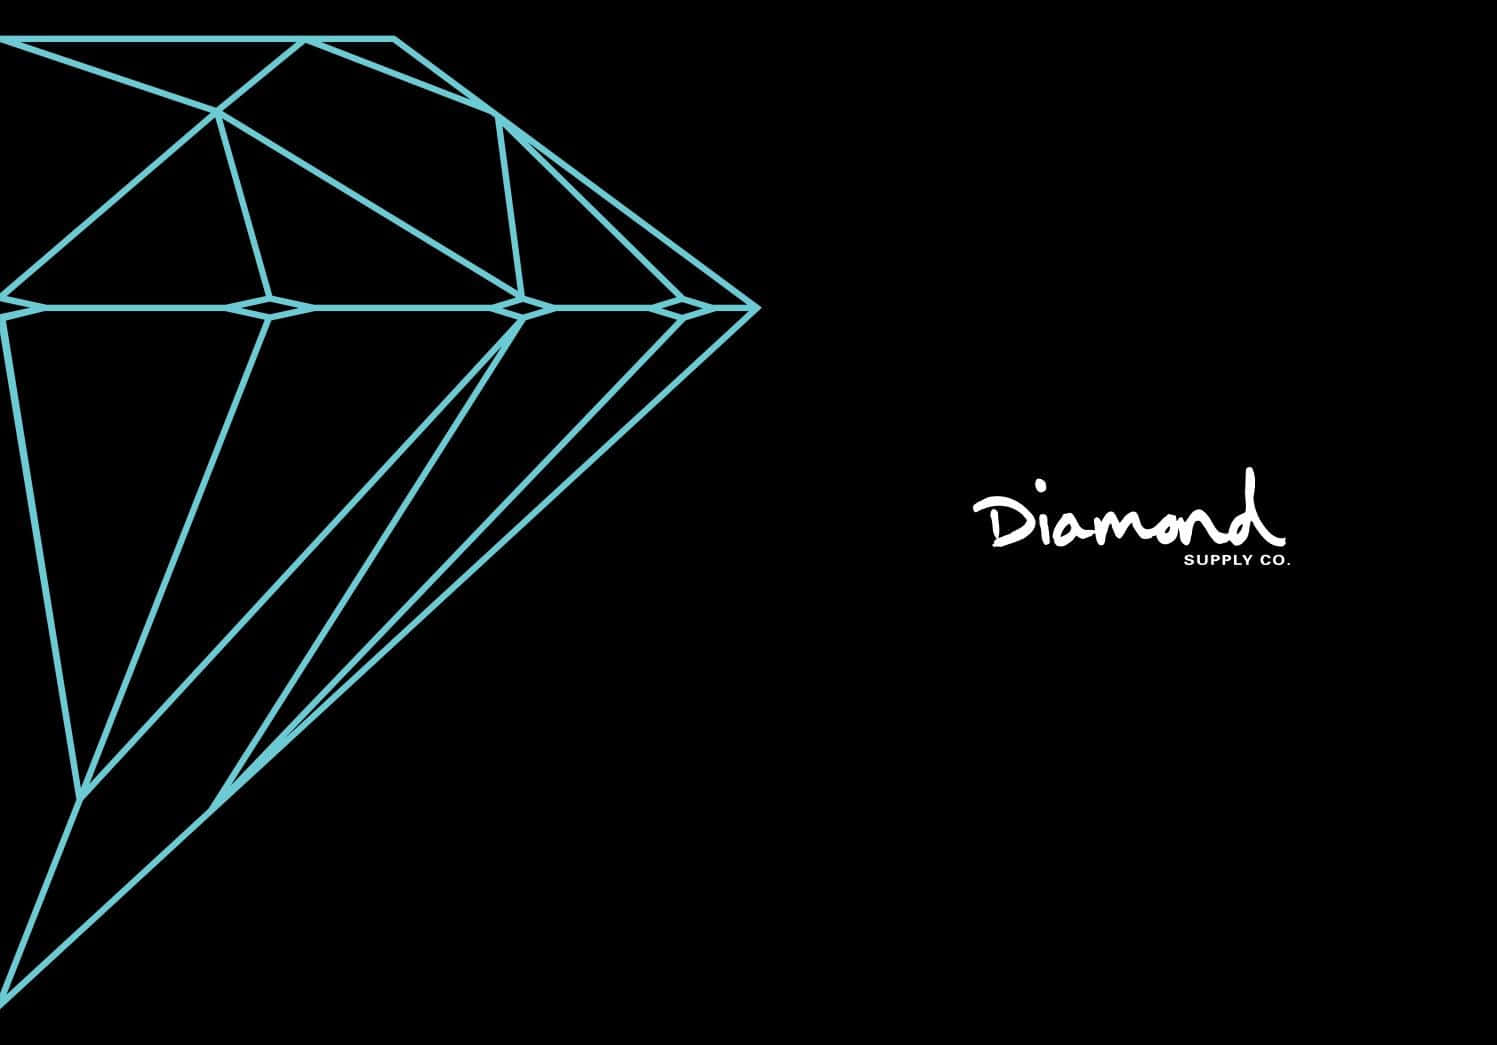 DasDiamond Supply Co Logo. Wallpaper